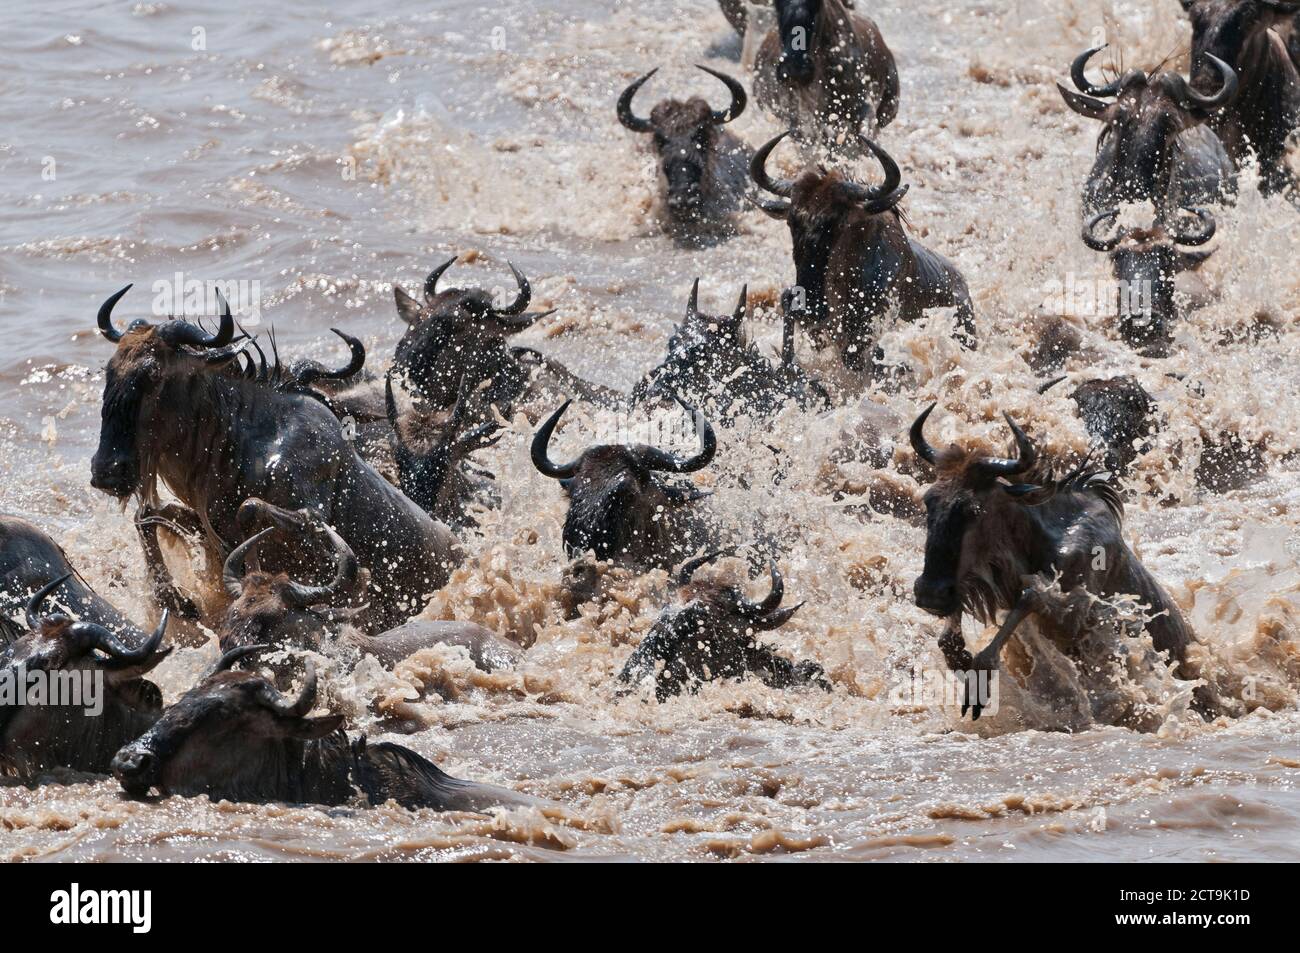 Africa, Kenya, Maasai Mara National Reserve, Blue Wildebeest (Connochaetes taurinus) crossing the Mara River Stock Photo